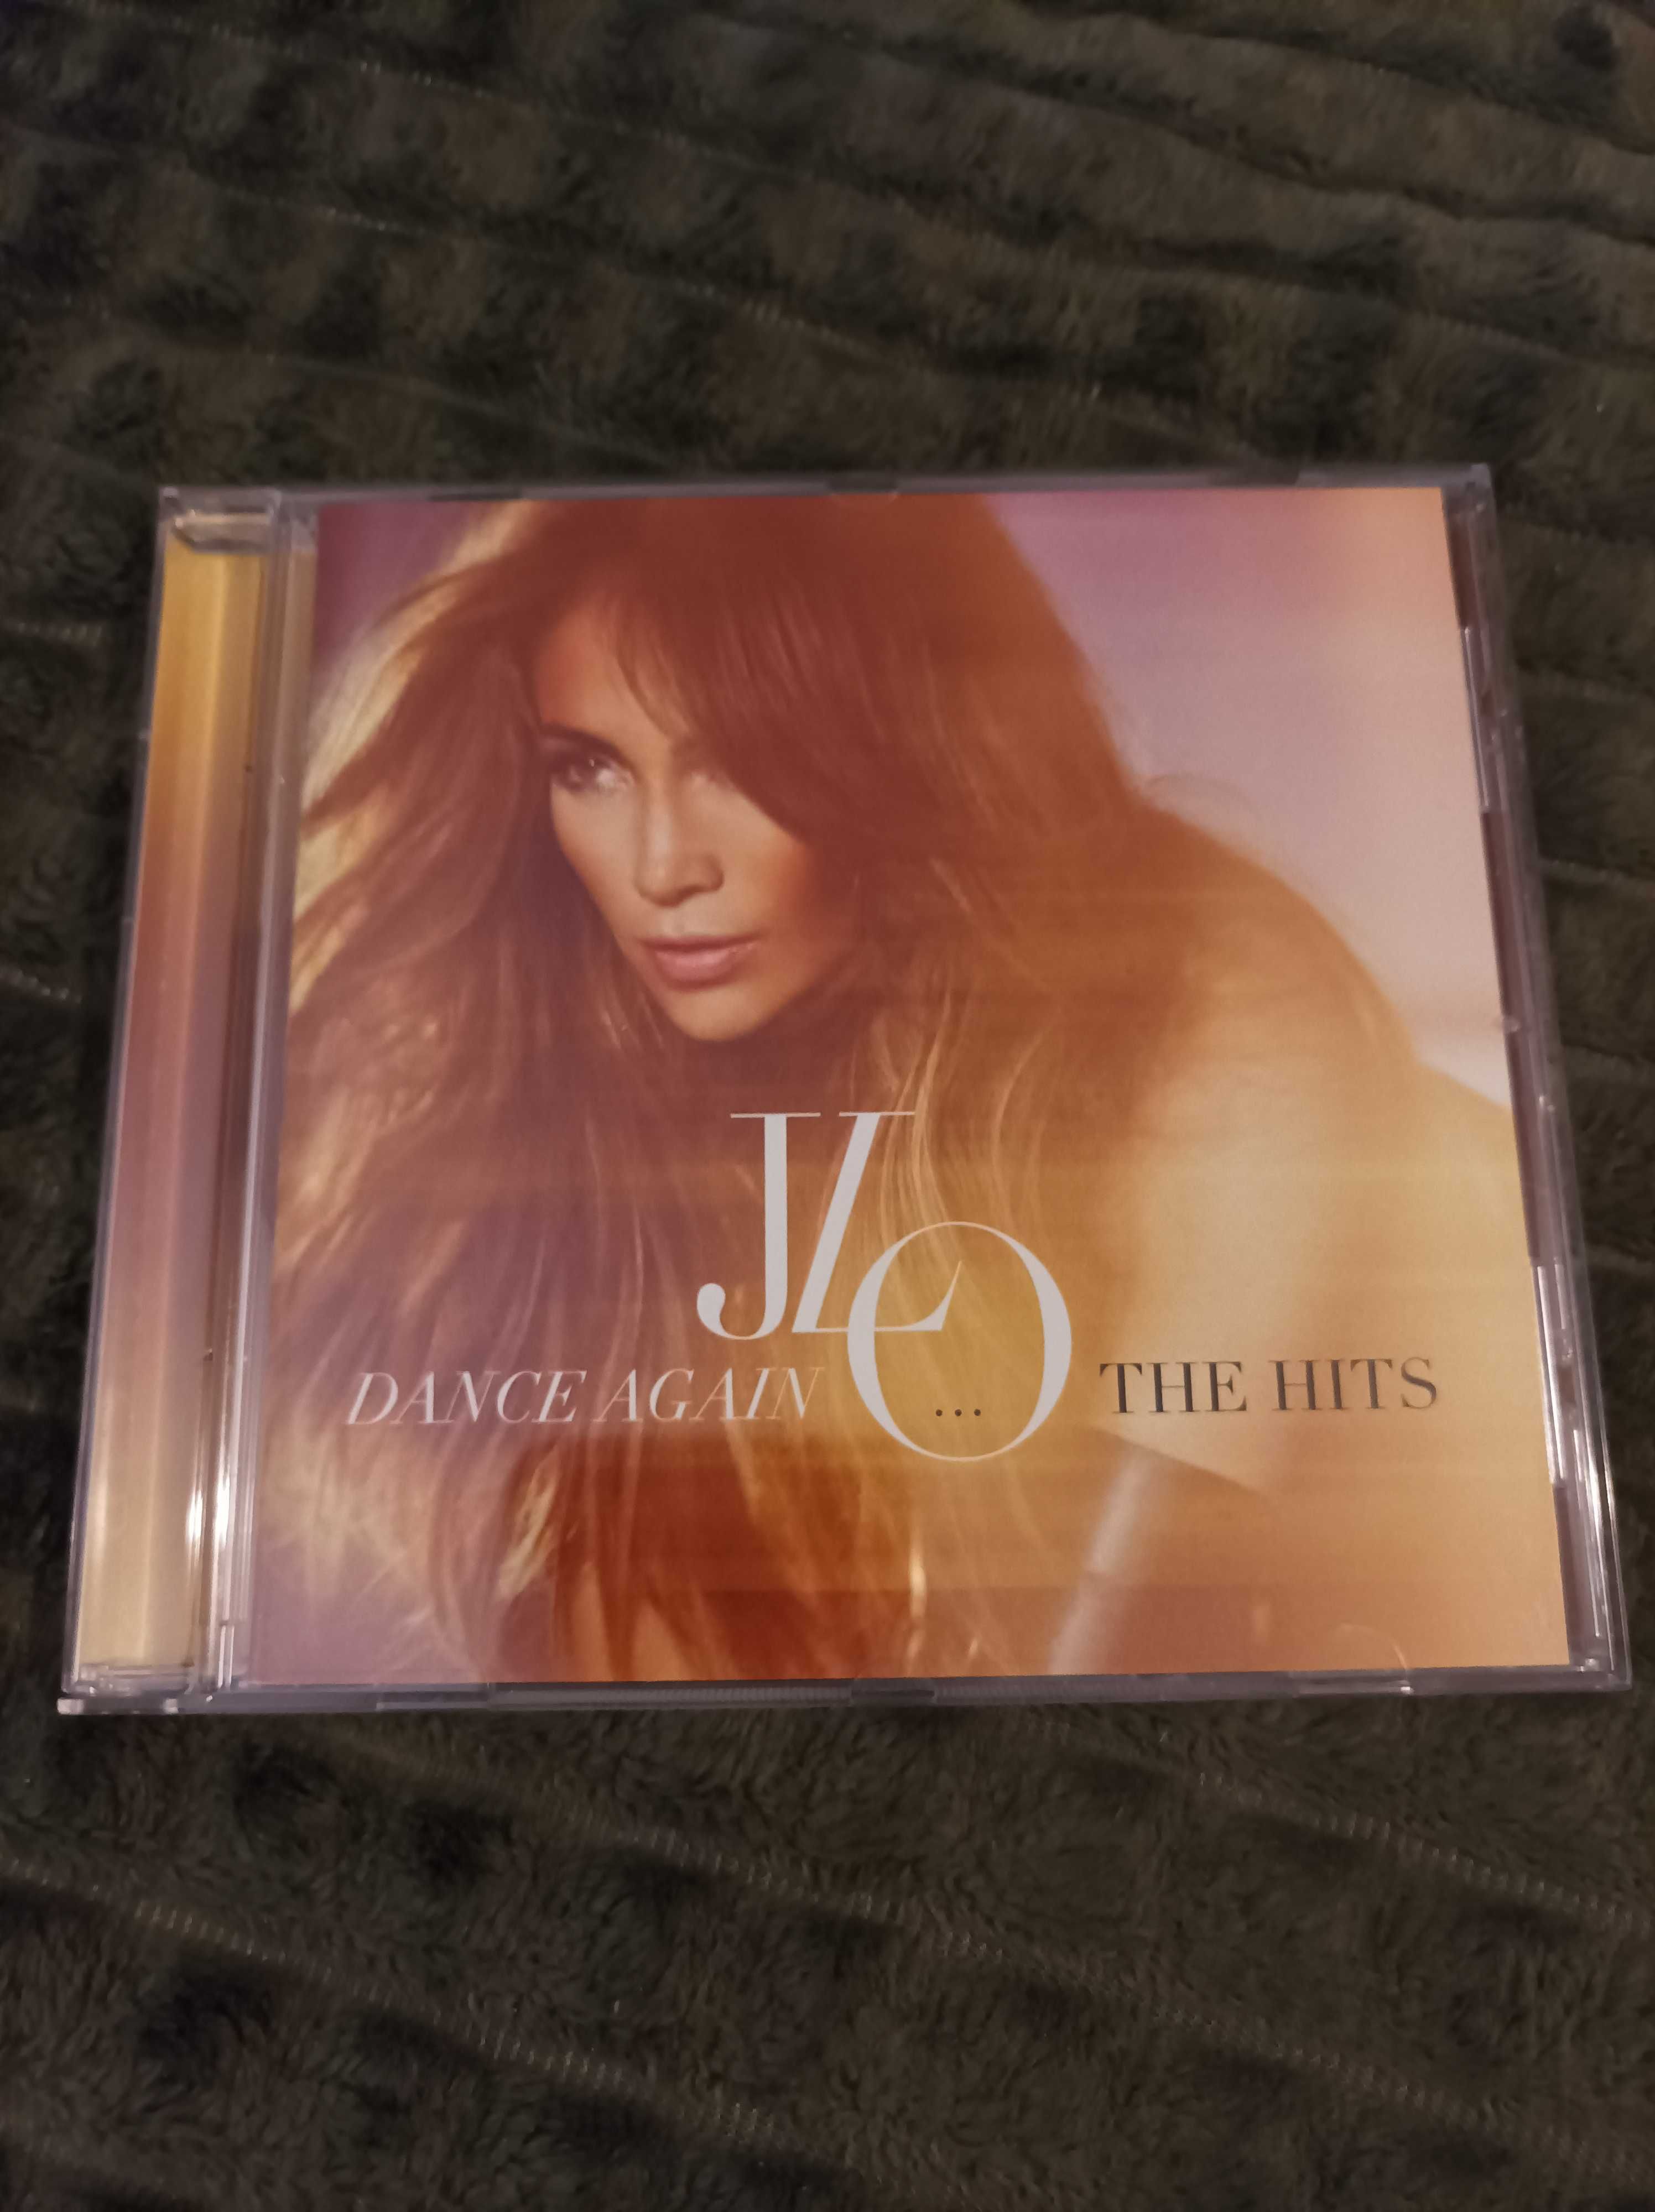 Płyta CD Jennifer Lopez "Dance again... The hits"